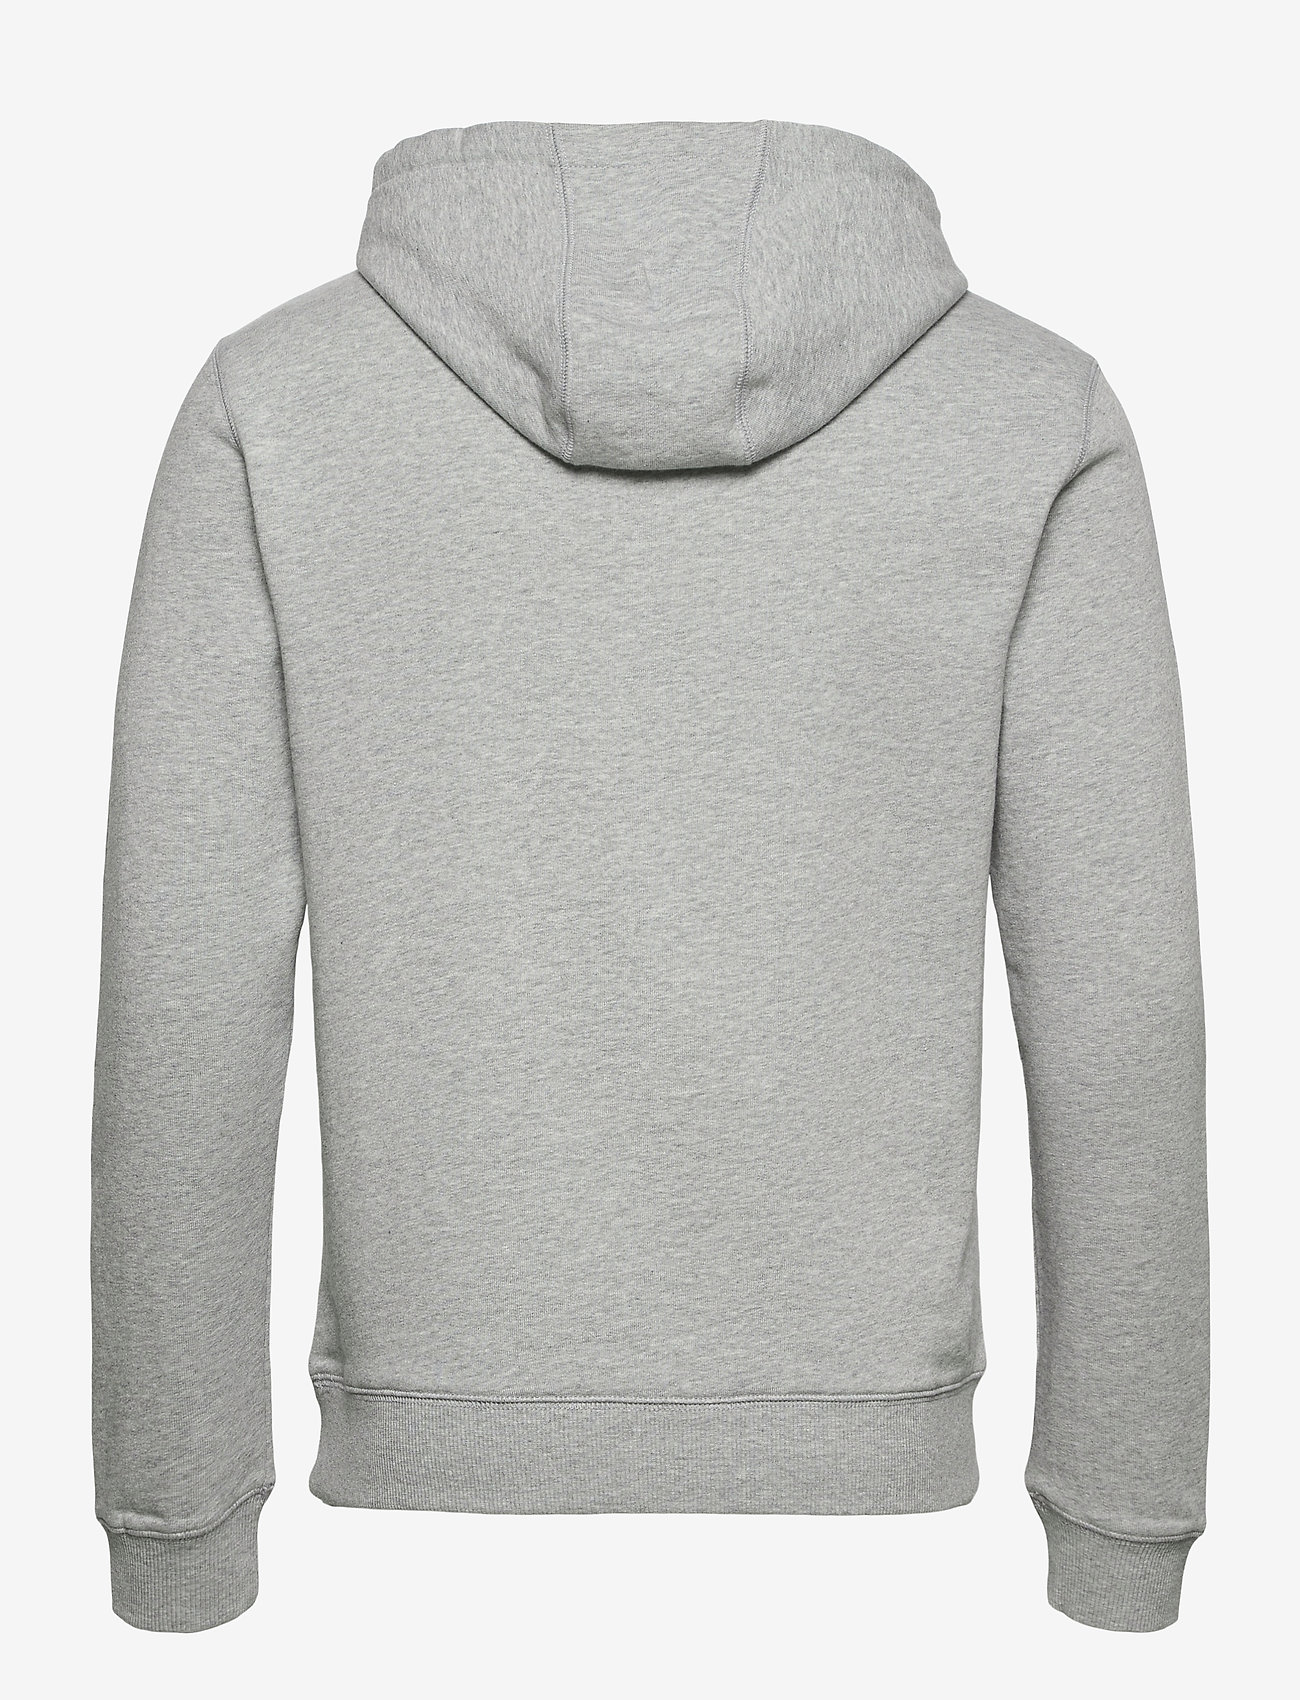 Farah - ZAIN LS HOODIE - sweatshirts - light grey marl - 1